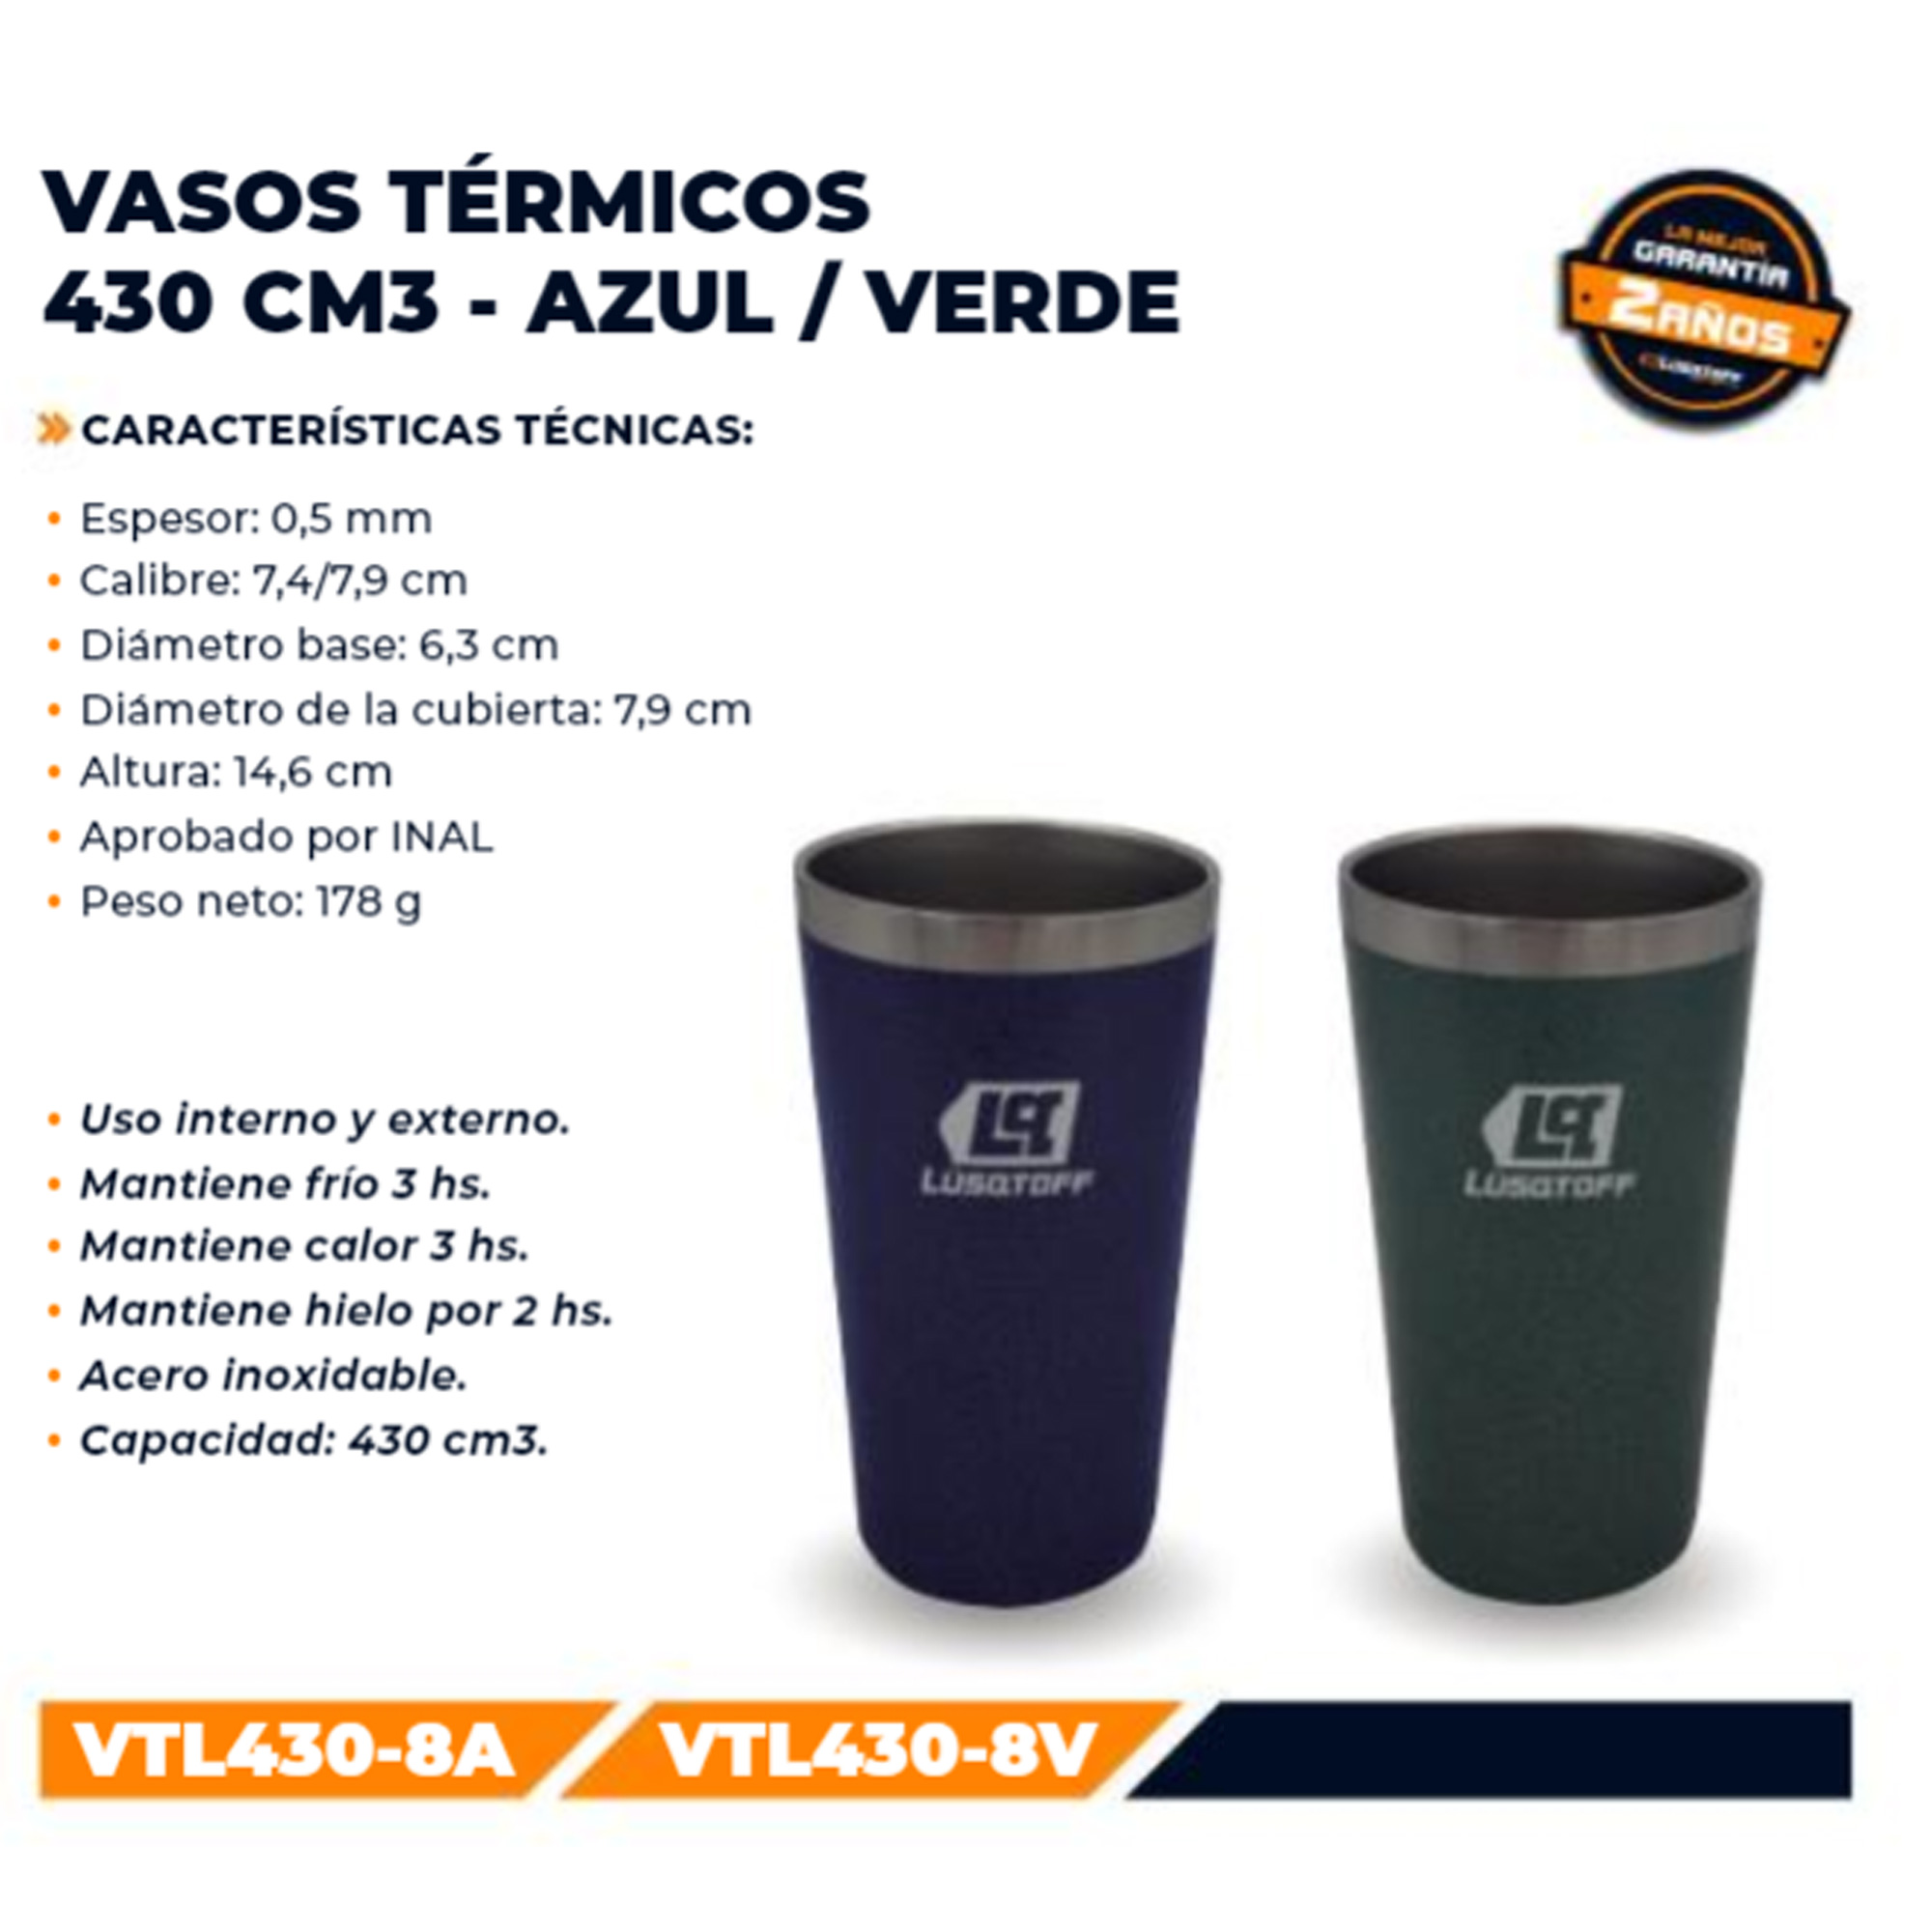 VTL430-8A LUSQTOFF                                                     | VASO TERMICO AZUL LUSQTOFF 430ML FRIO/CALOR 3HS VTL430-8A                                                                                                                                                                                                 